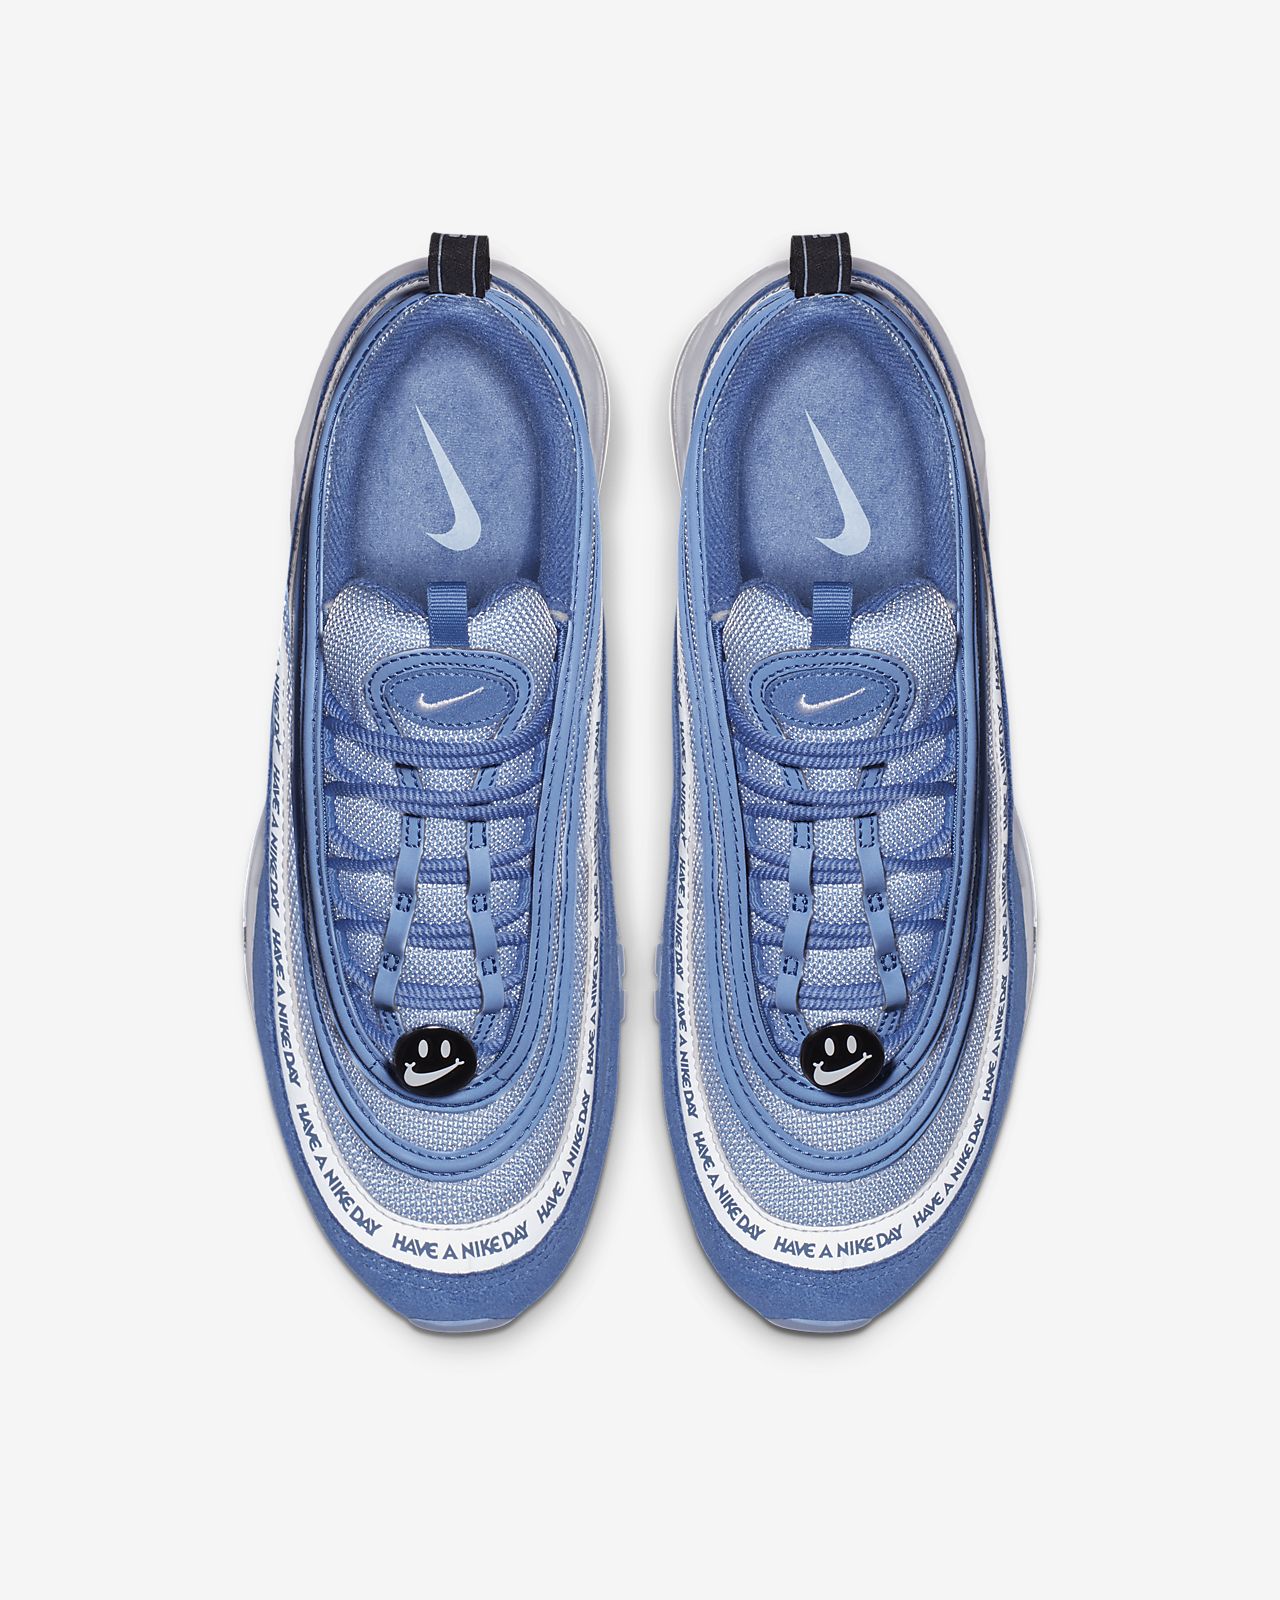 Nike Air Max 97 Ul '17 Se Women Shoes from Foot Locker.